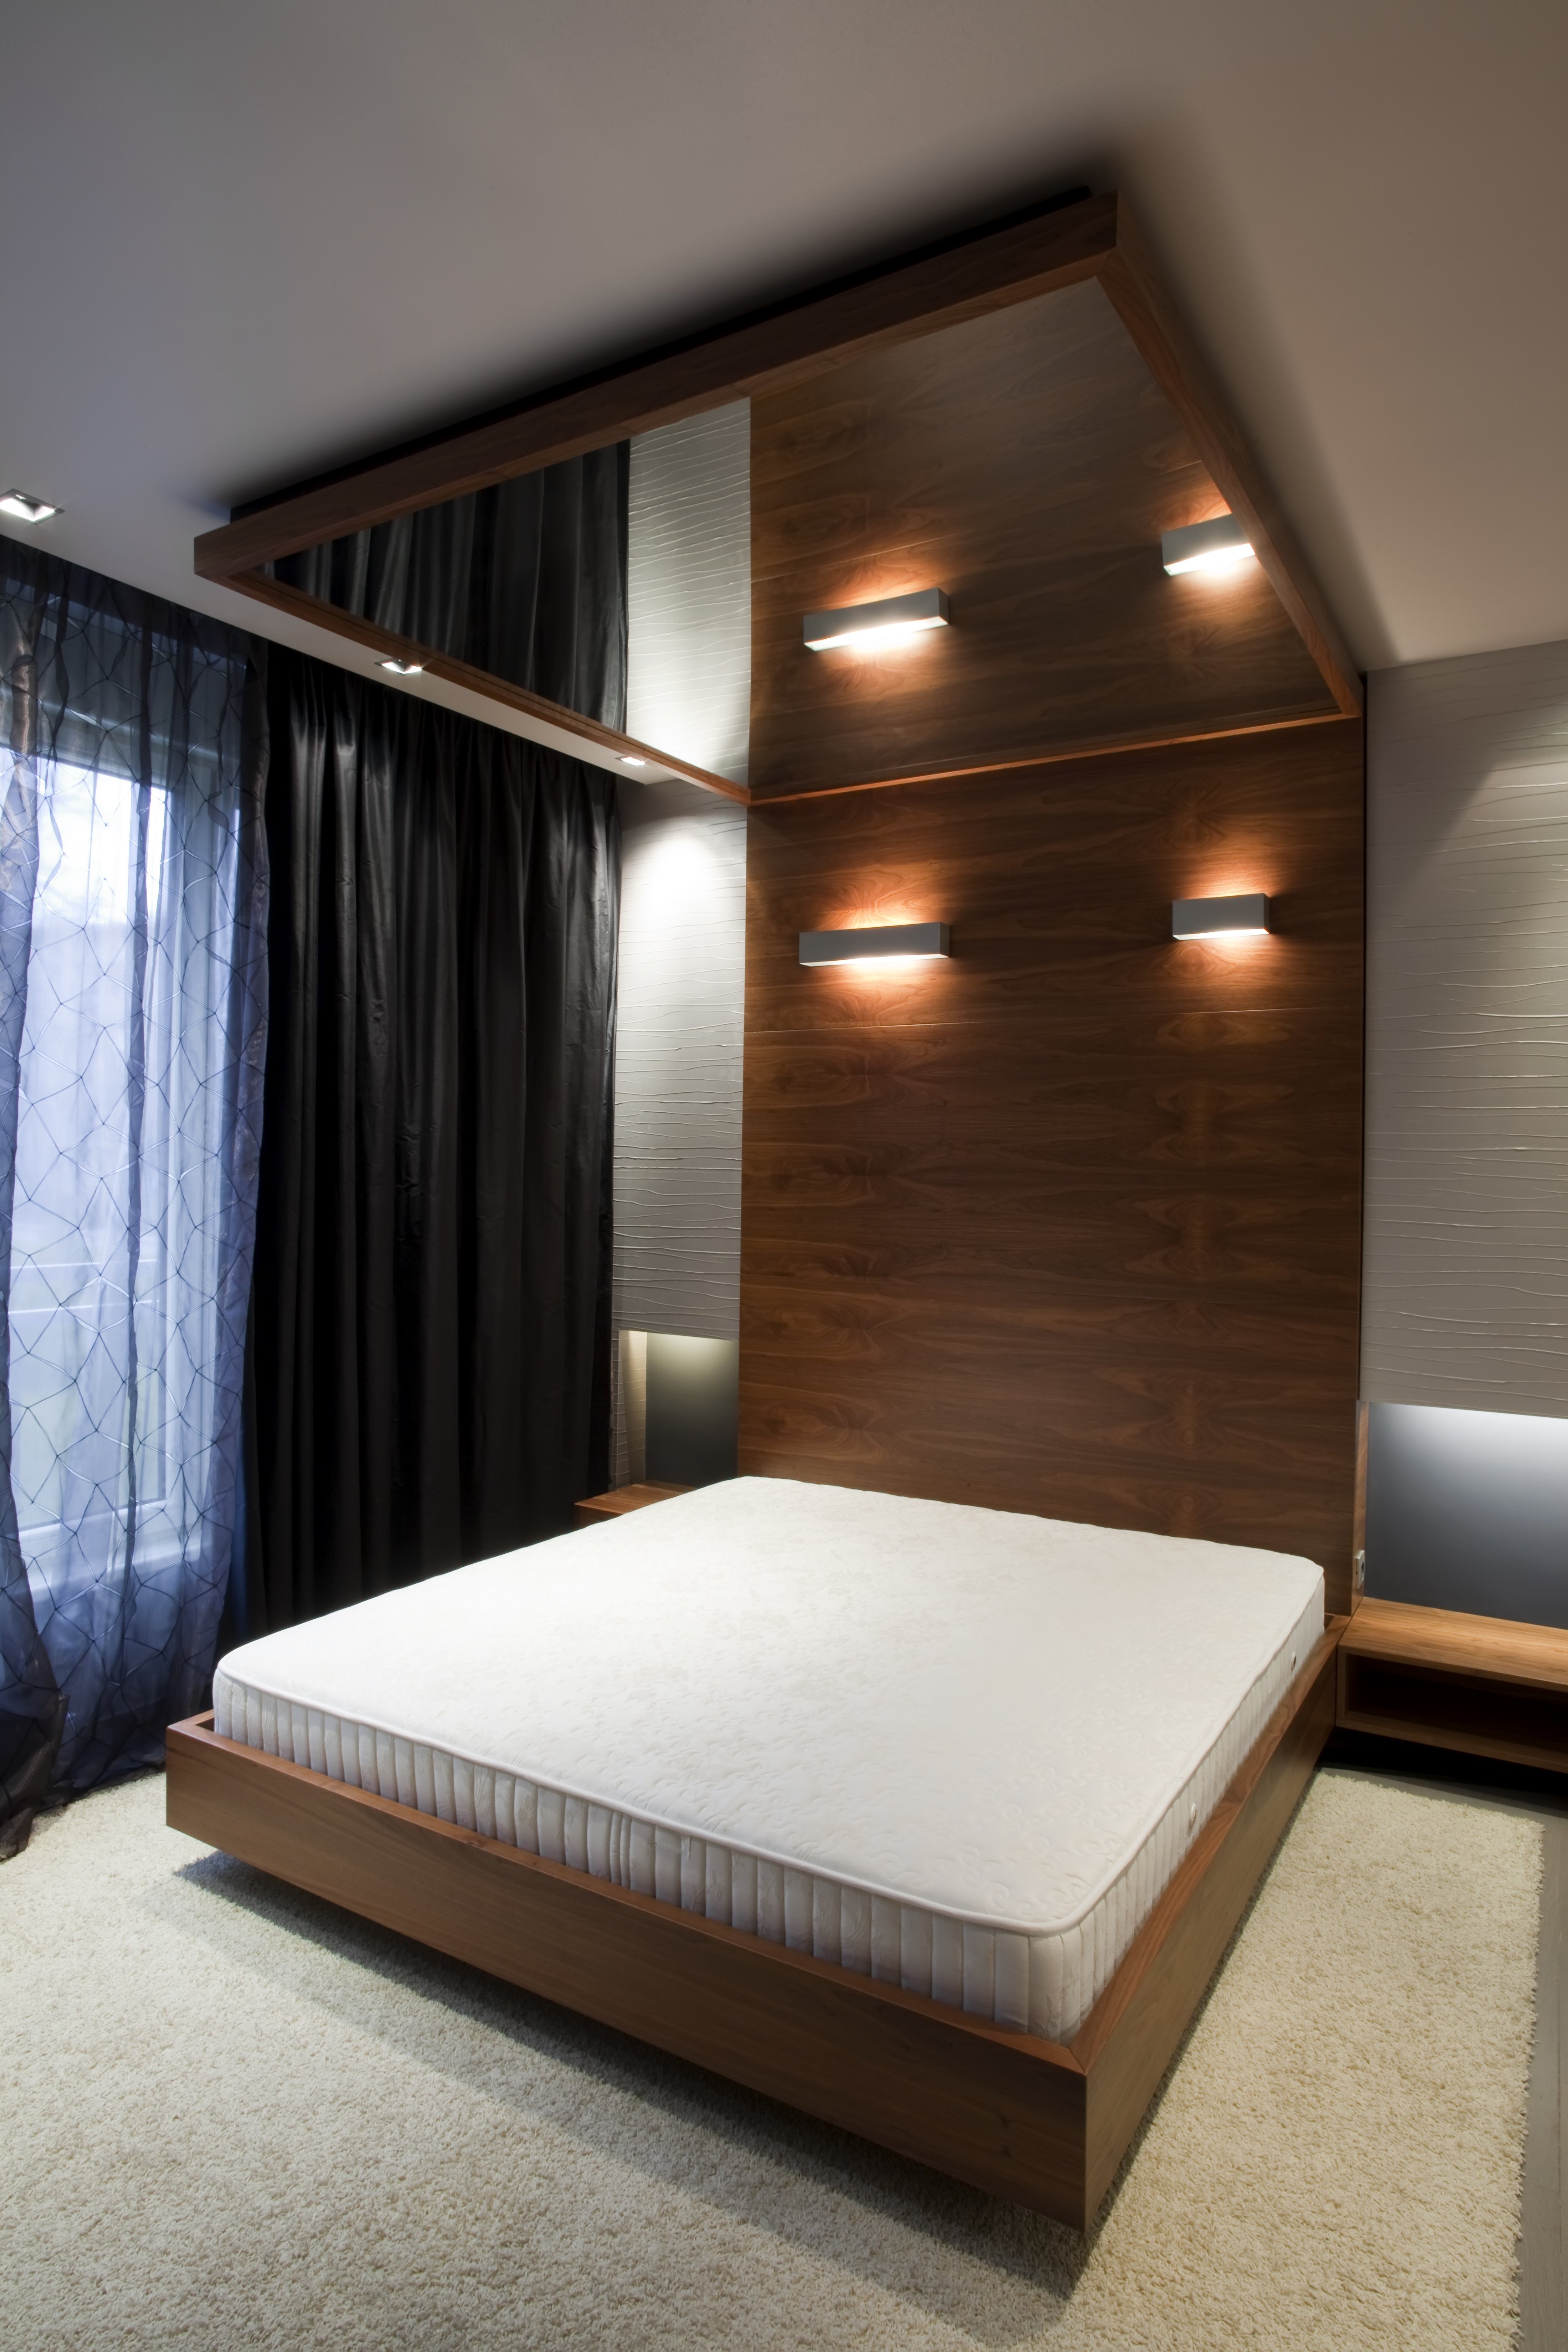 2021 False Ceiling Designs For Bedroom - HomeLane Blog